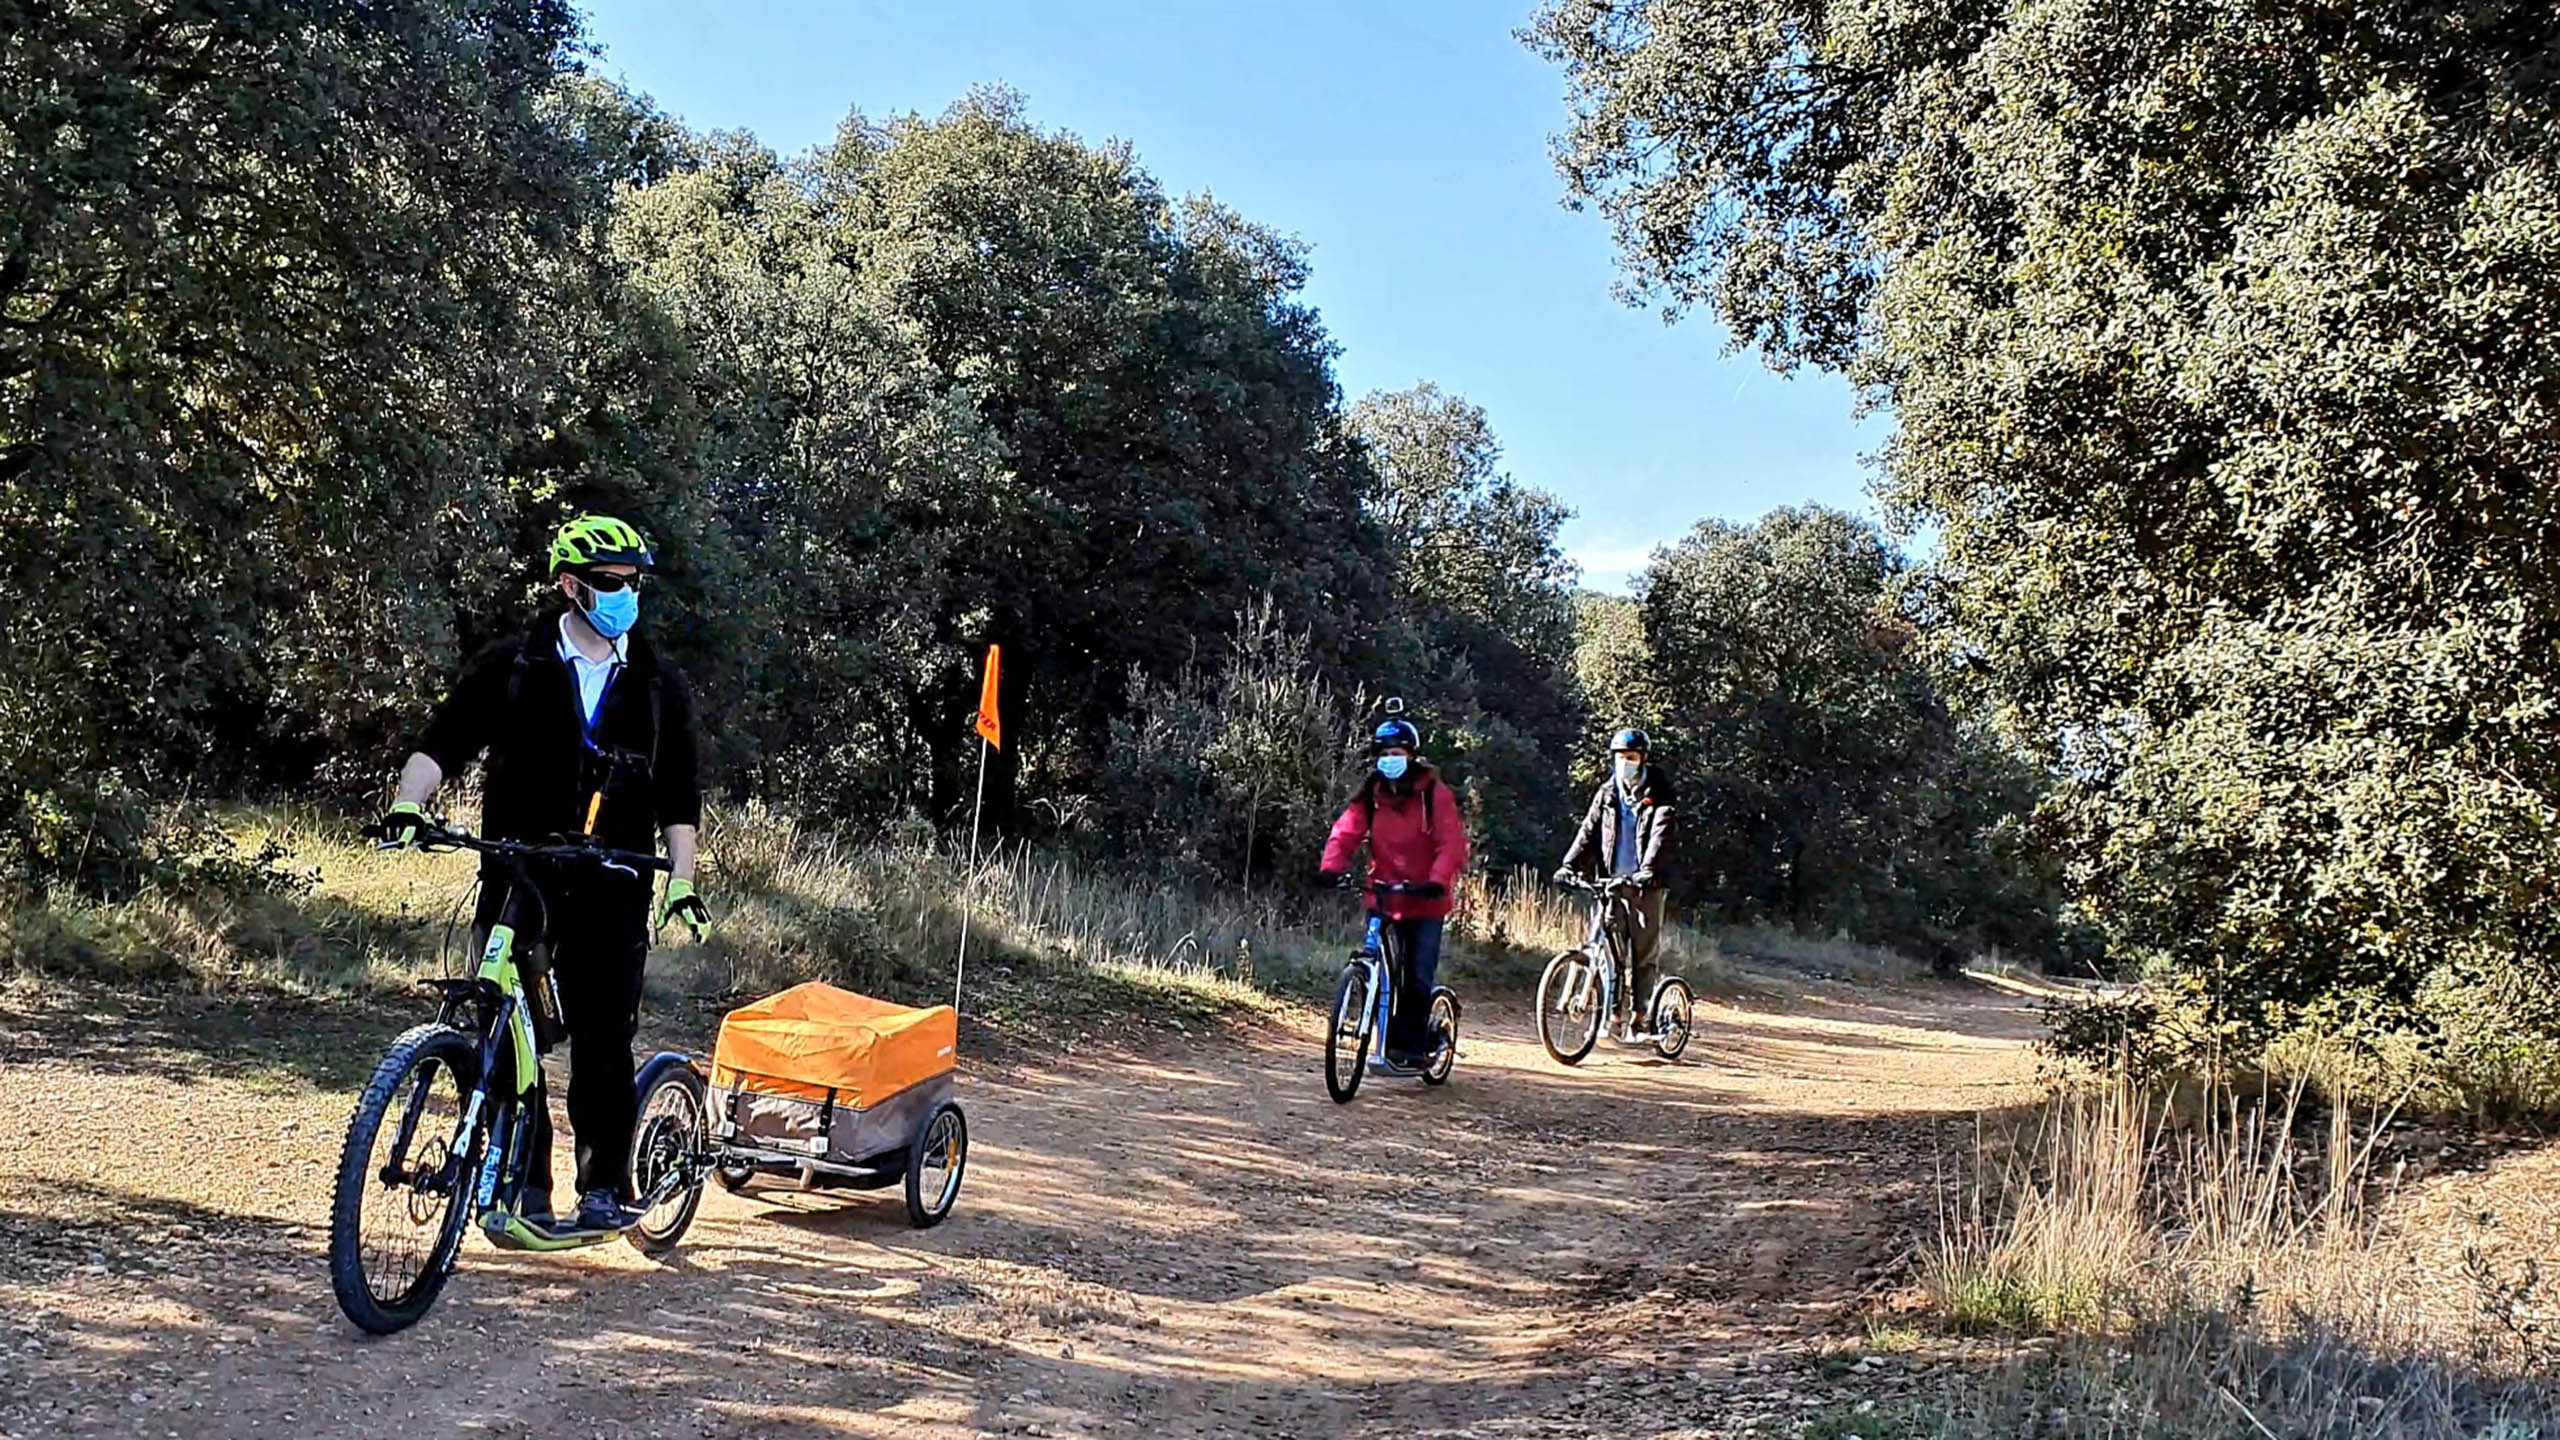 Tour e-scooter y visita guiada + cata en Pago de Larrainzar